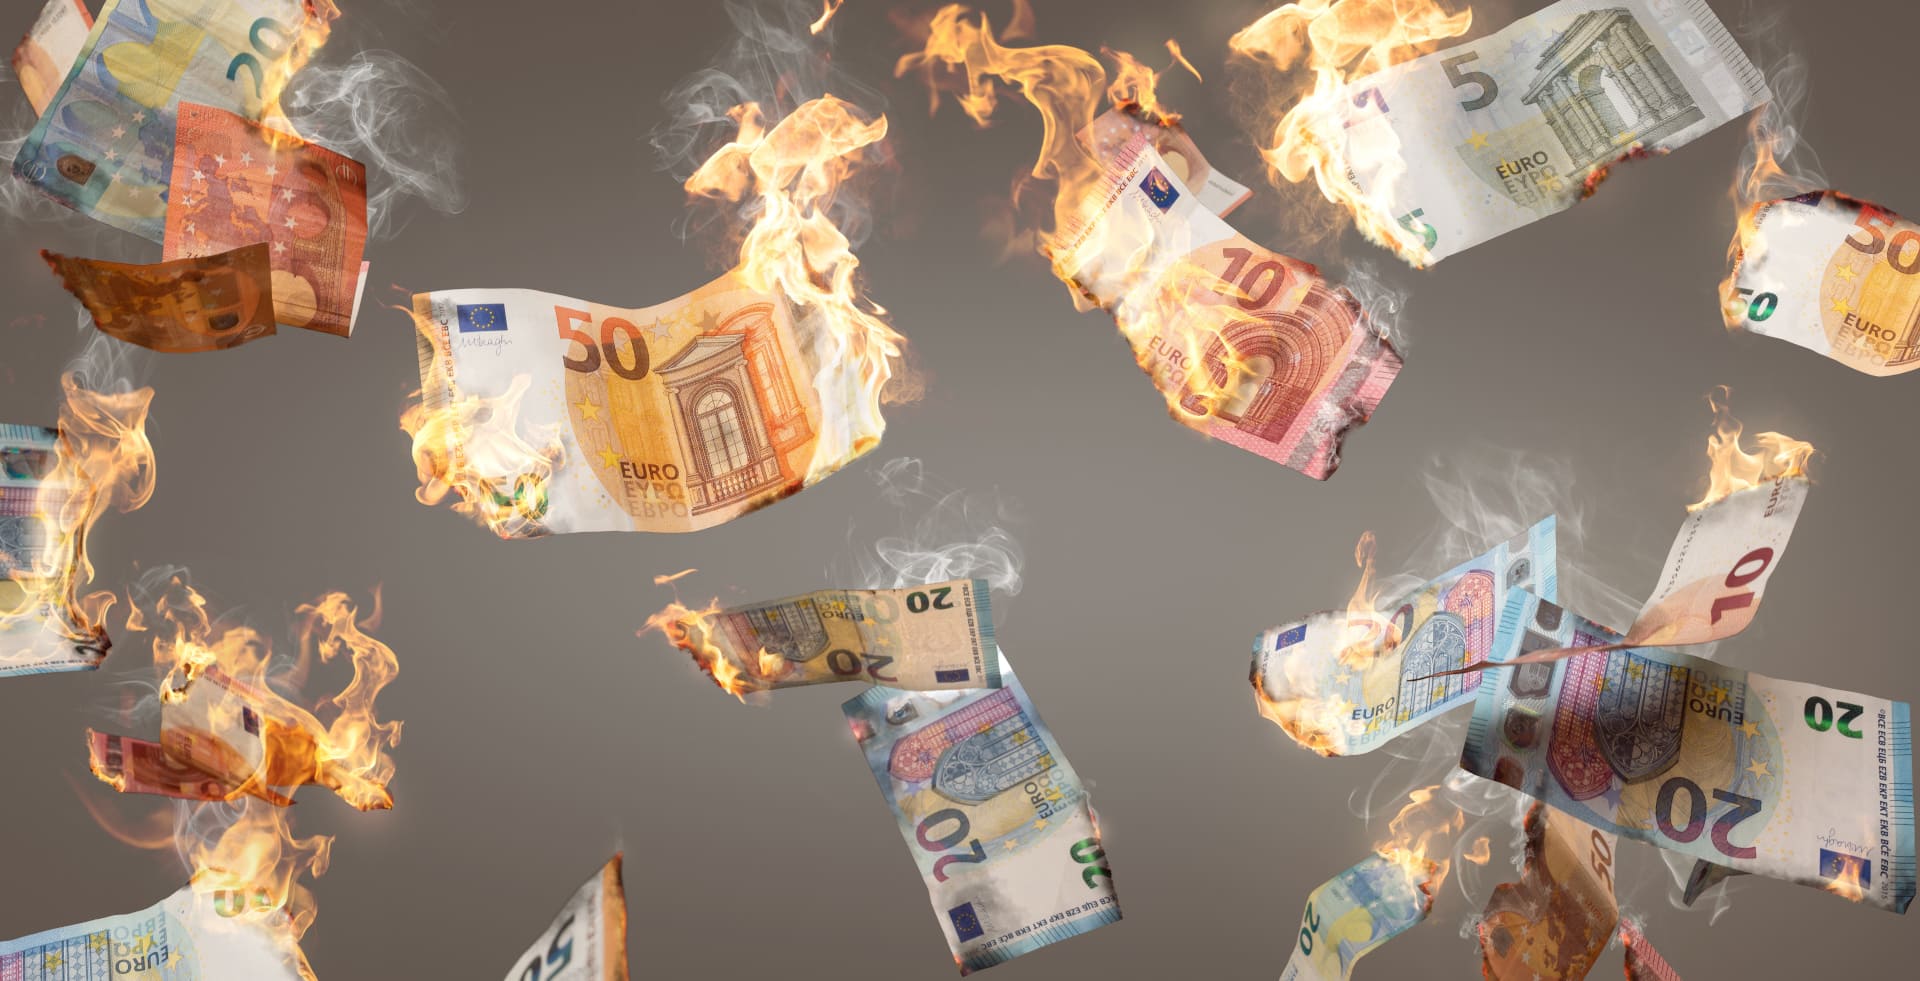 plusieurs billets en euros enflammés tombent